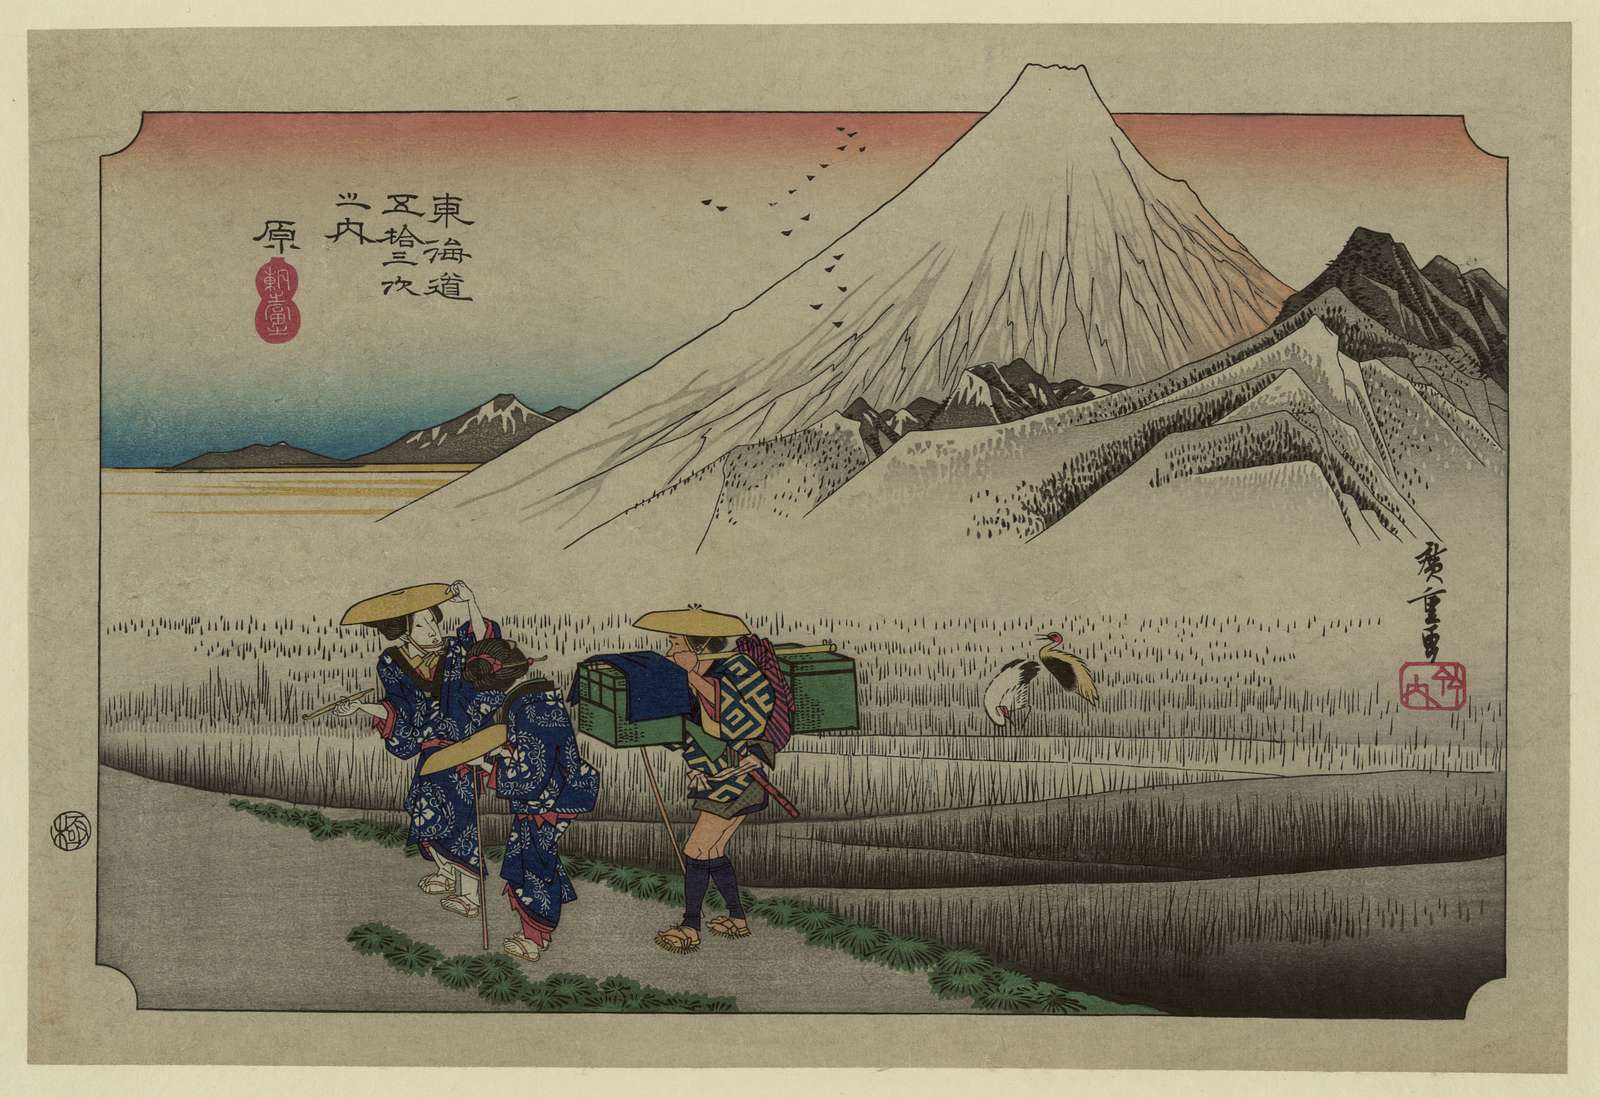 depicting Mount Fuji